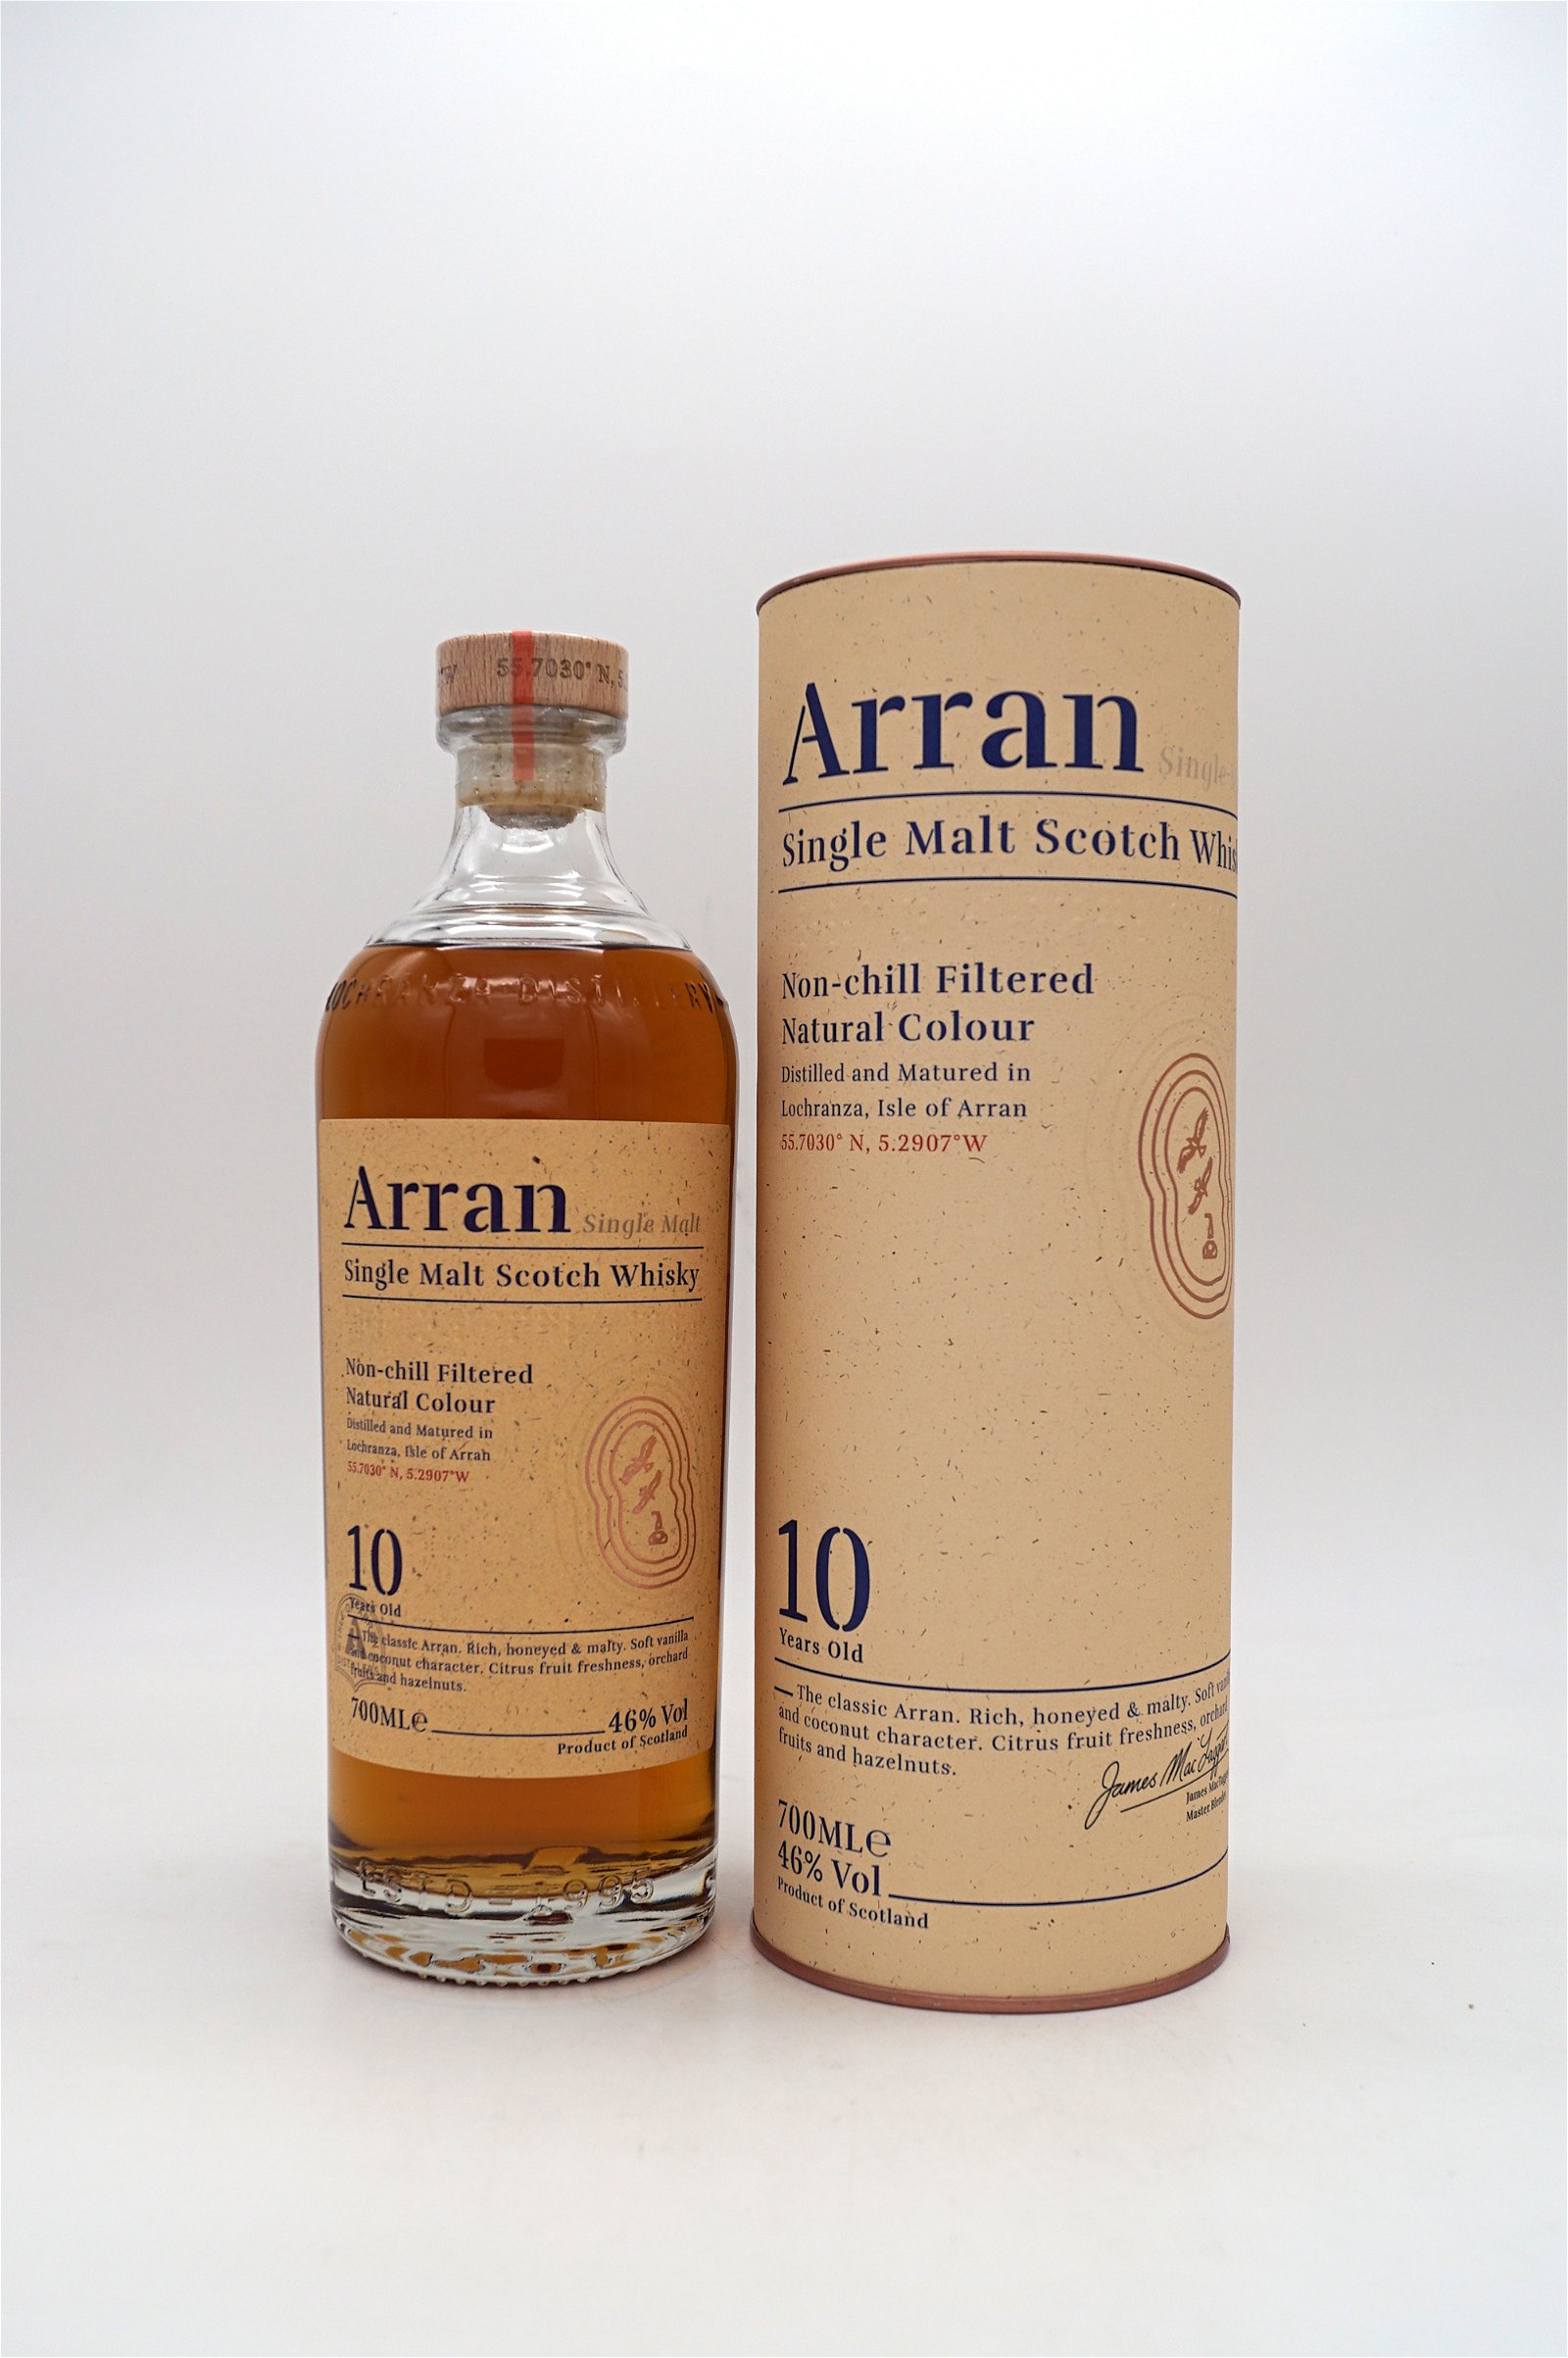 The Arran 10 Jahre Single Malt Scotch Whisky